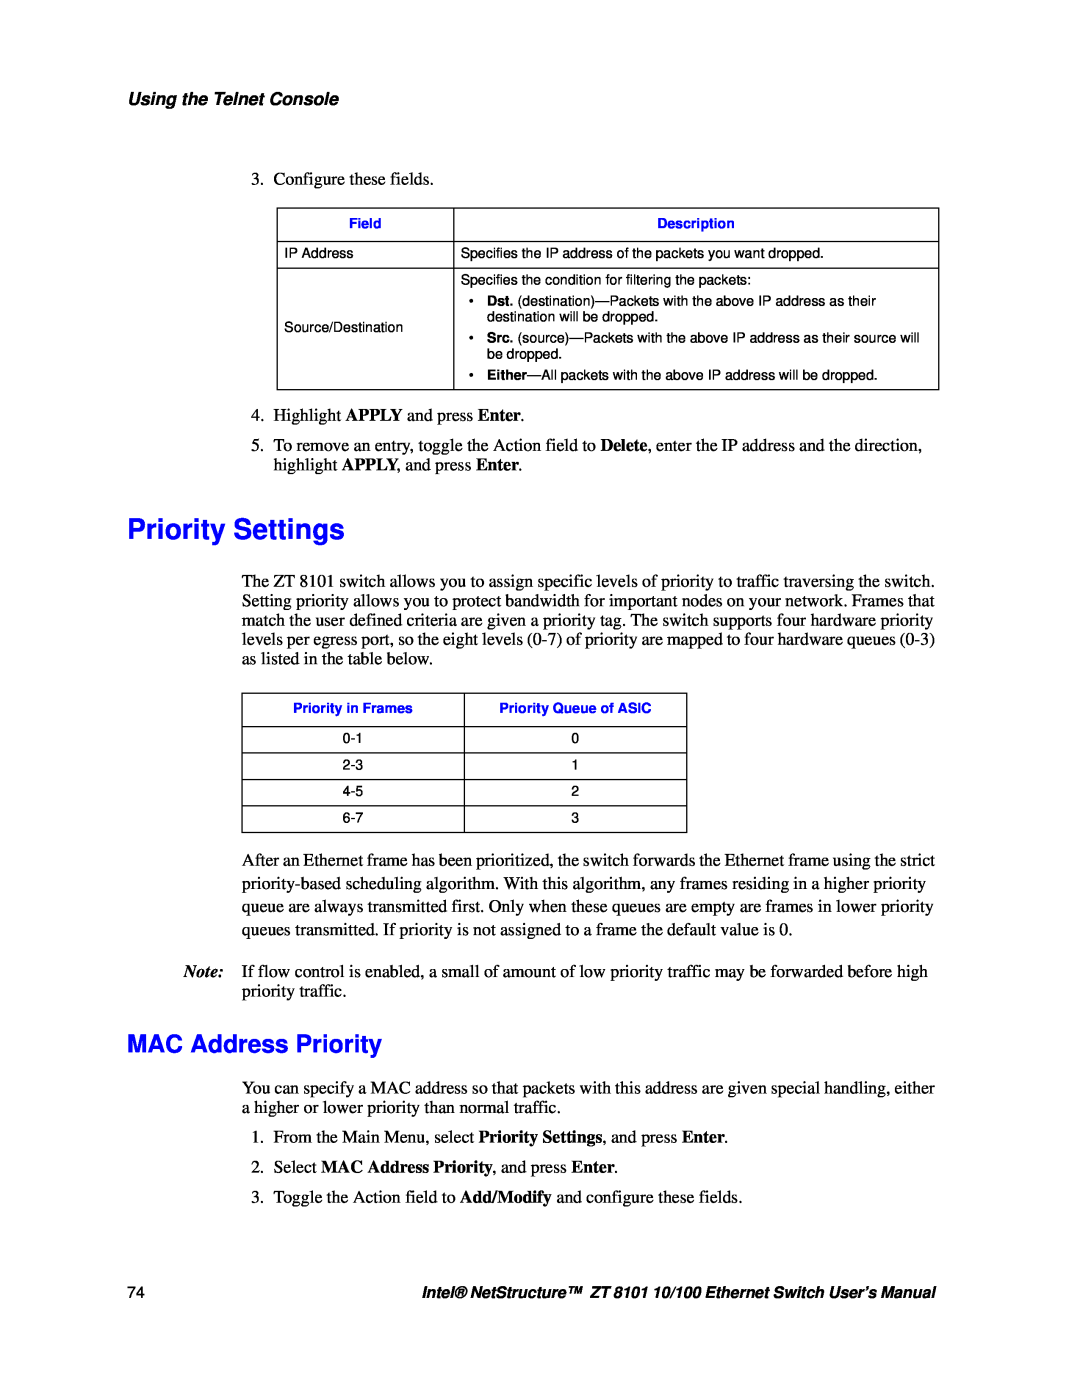 Intel ZT 8101 10/100 user manual Priority Settings, MAC Address Priority, Using the Telnet Console 